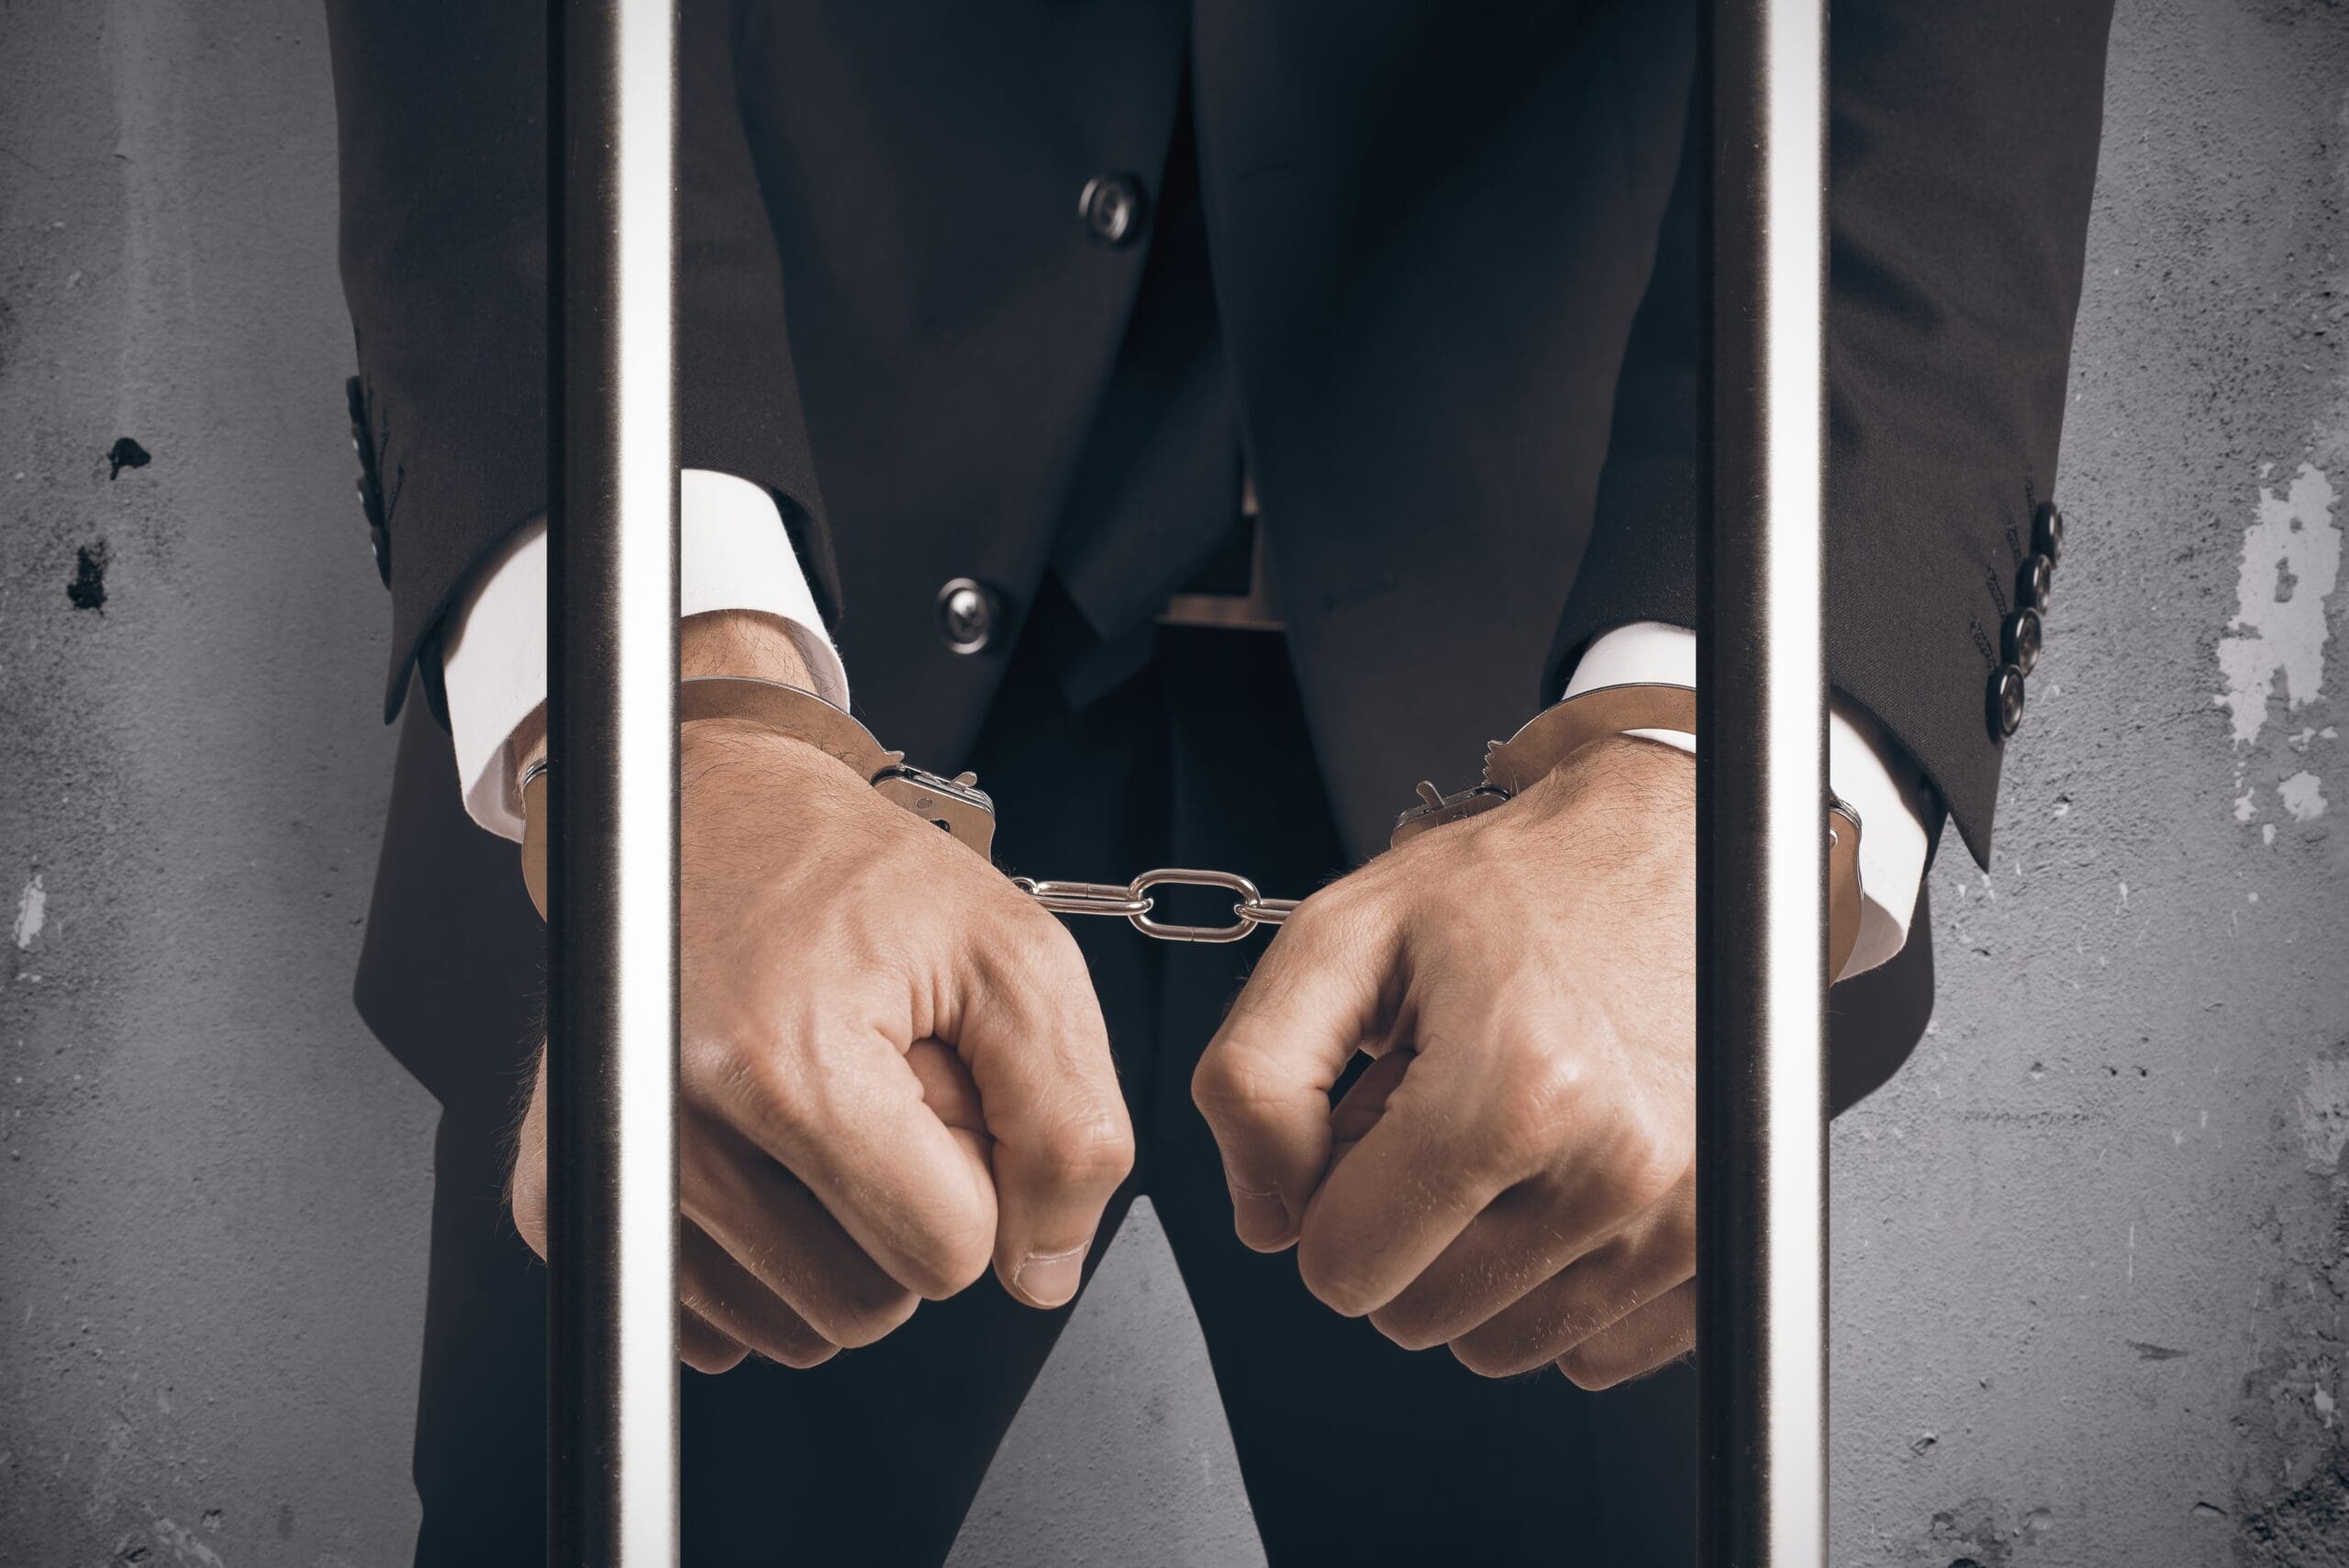 A man in handcuffs behind bars.